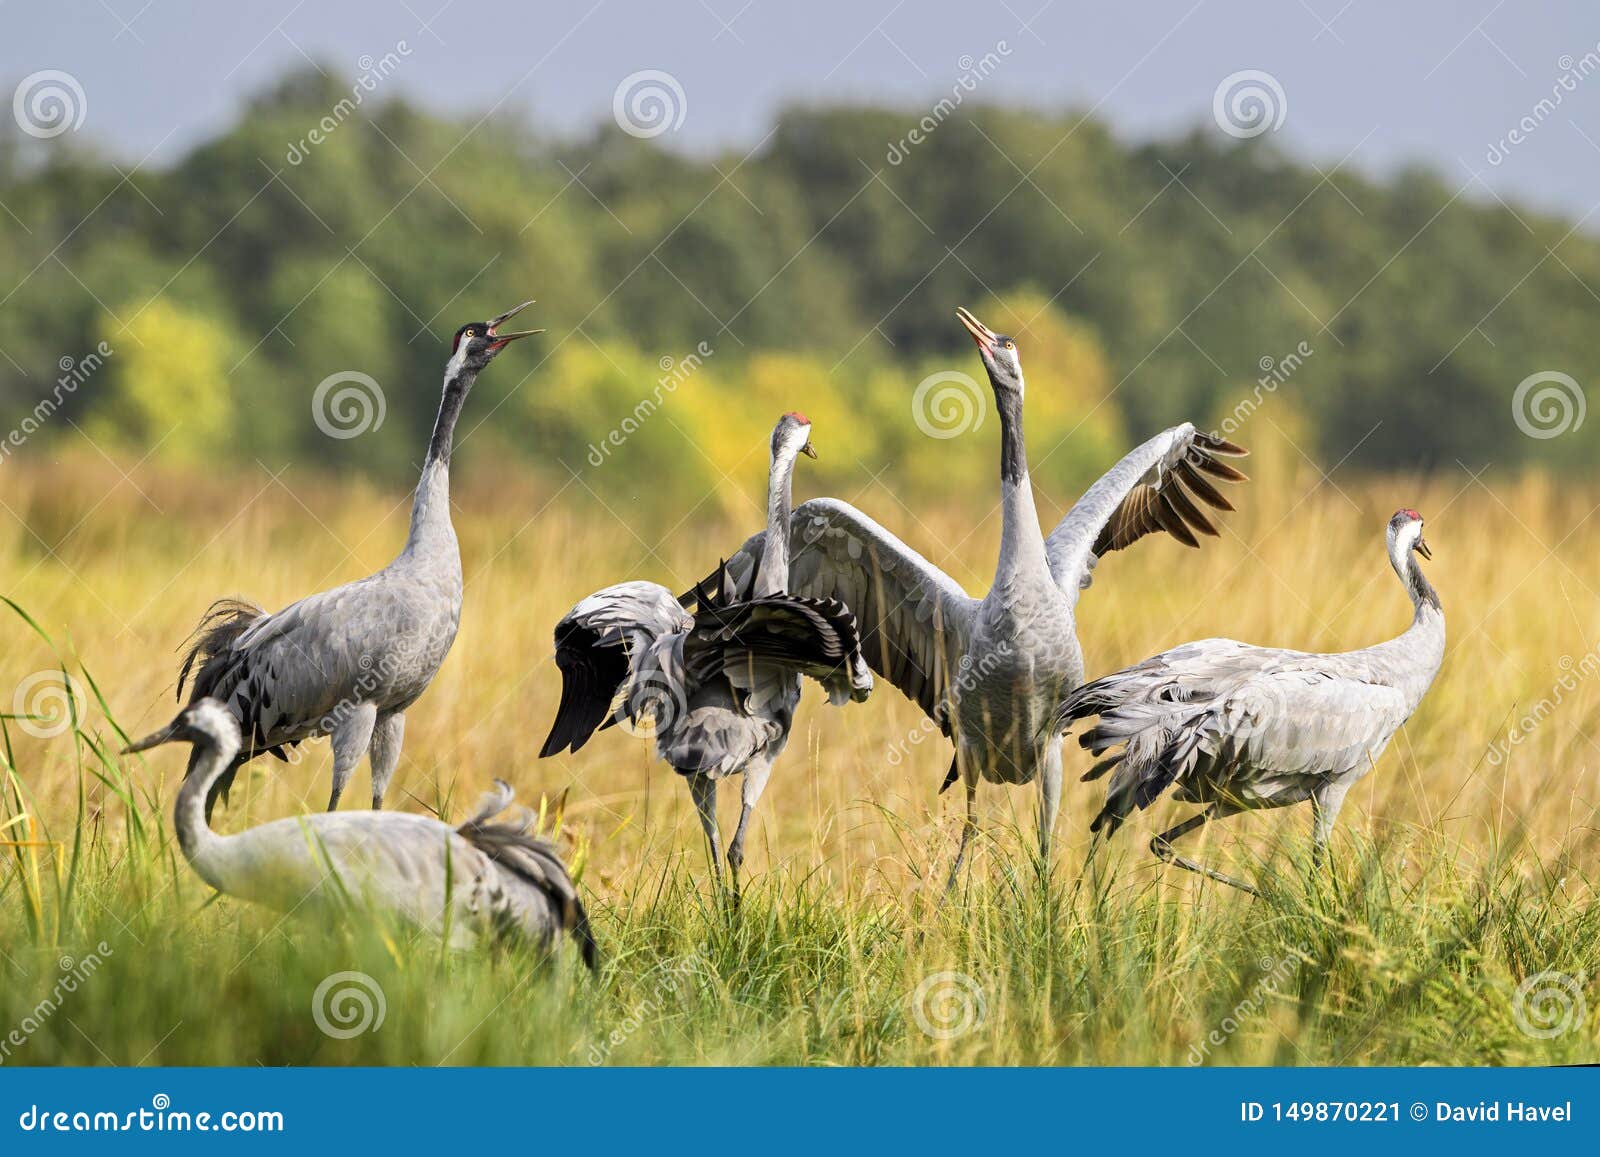 common crane - grus grus